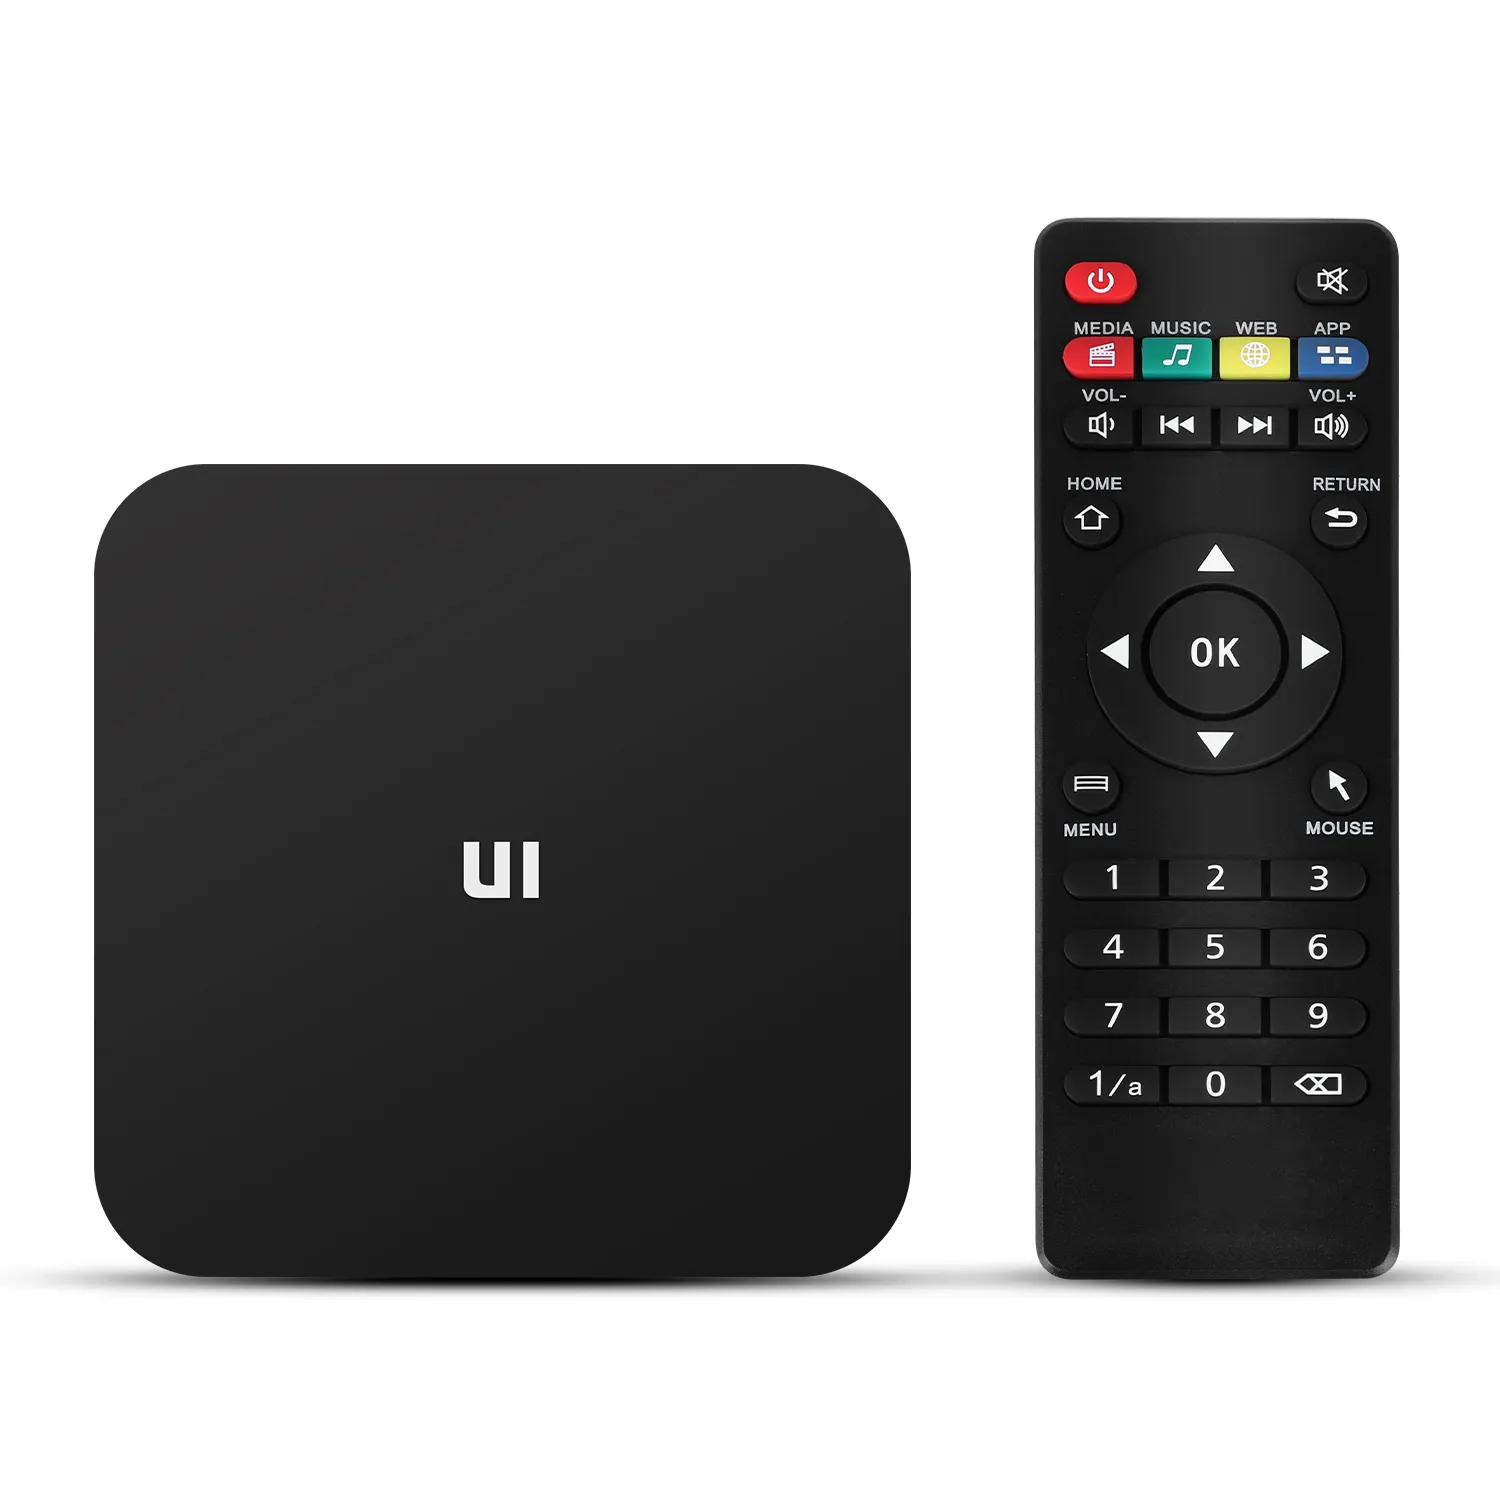 Junuo U1 Internet Tvbox S905w Android 4k Smart Ott Tv Box